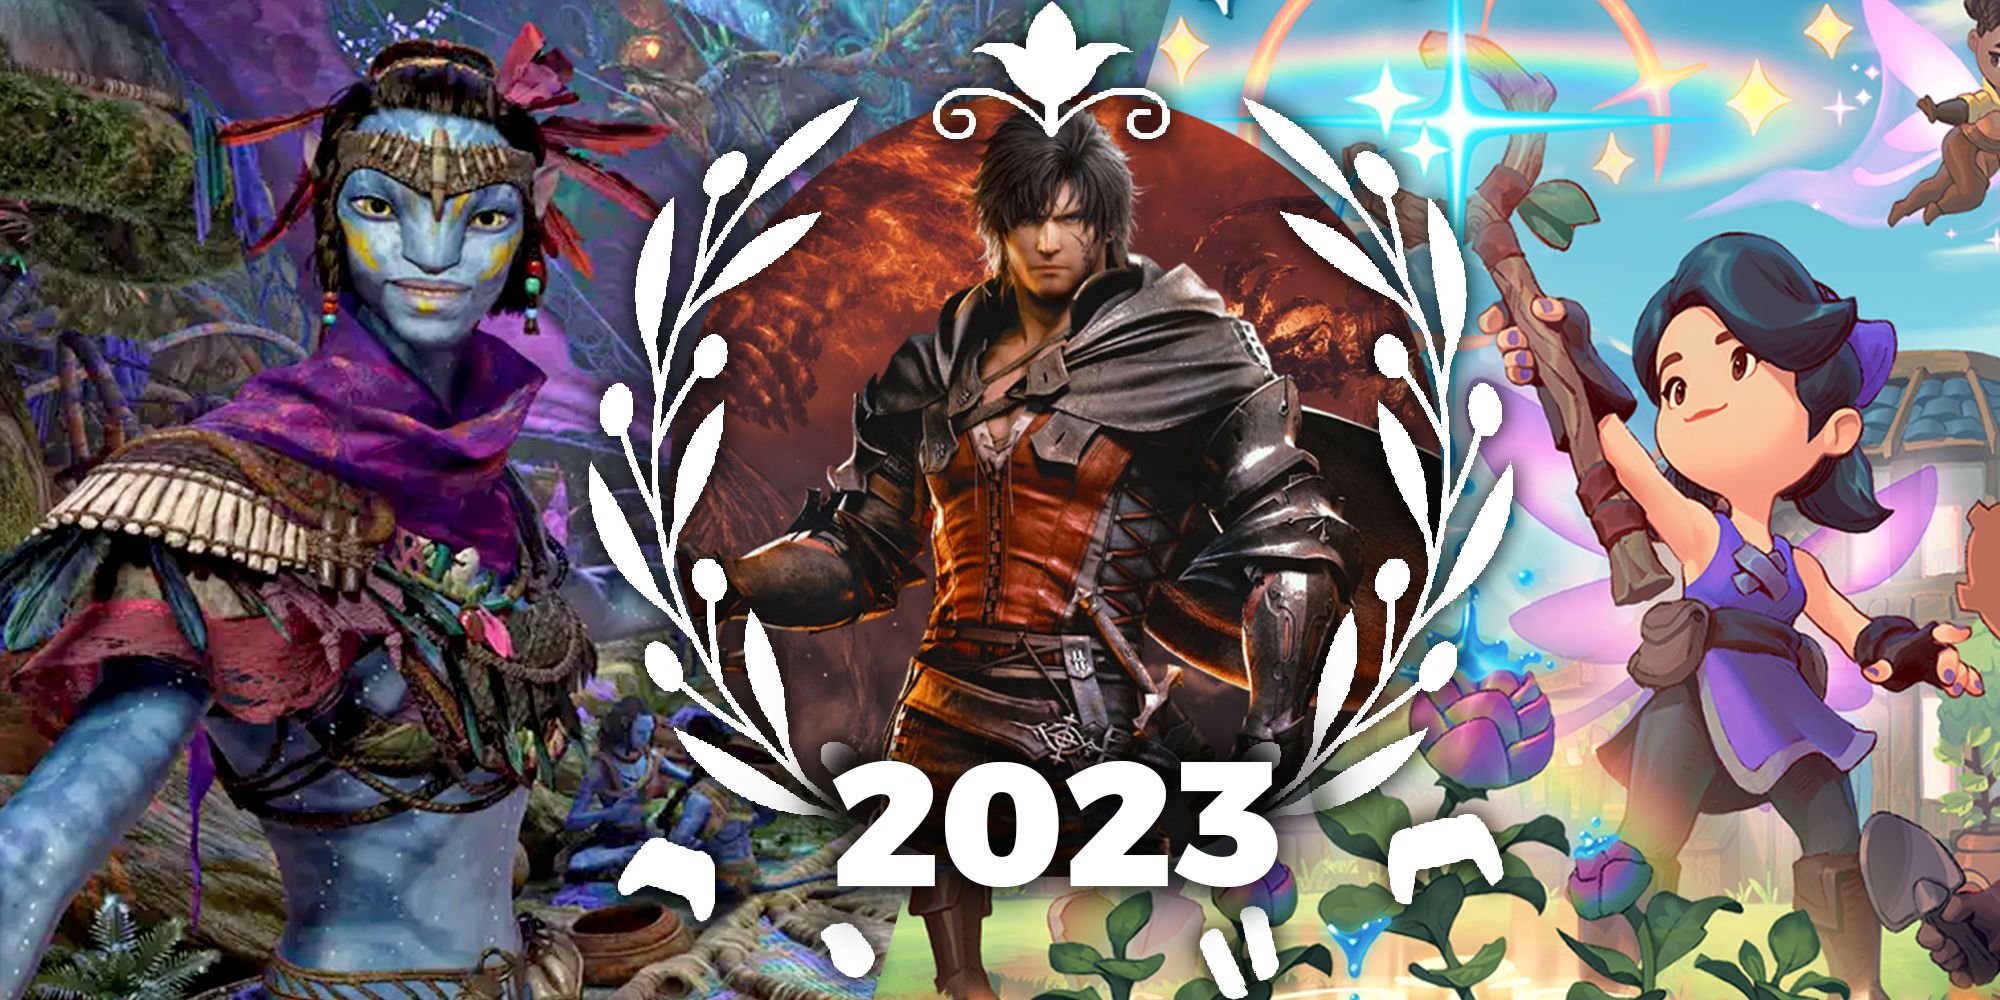 GOTY 2023 Feature Avatar, Final Fantasy 16, and Fae Farm